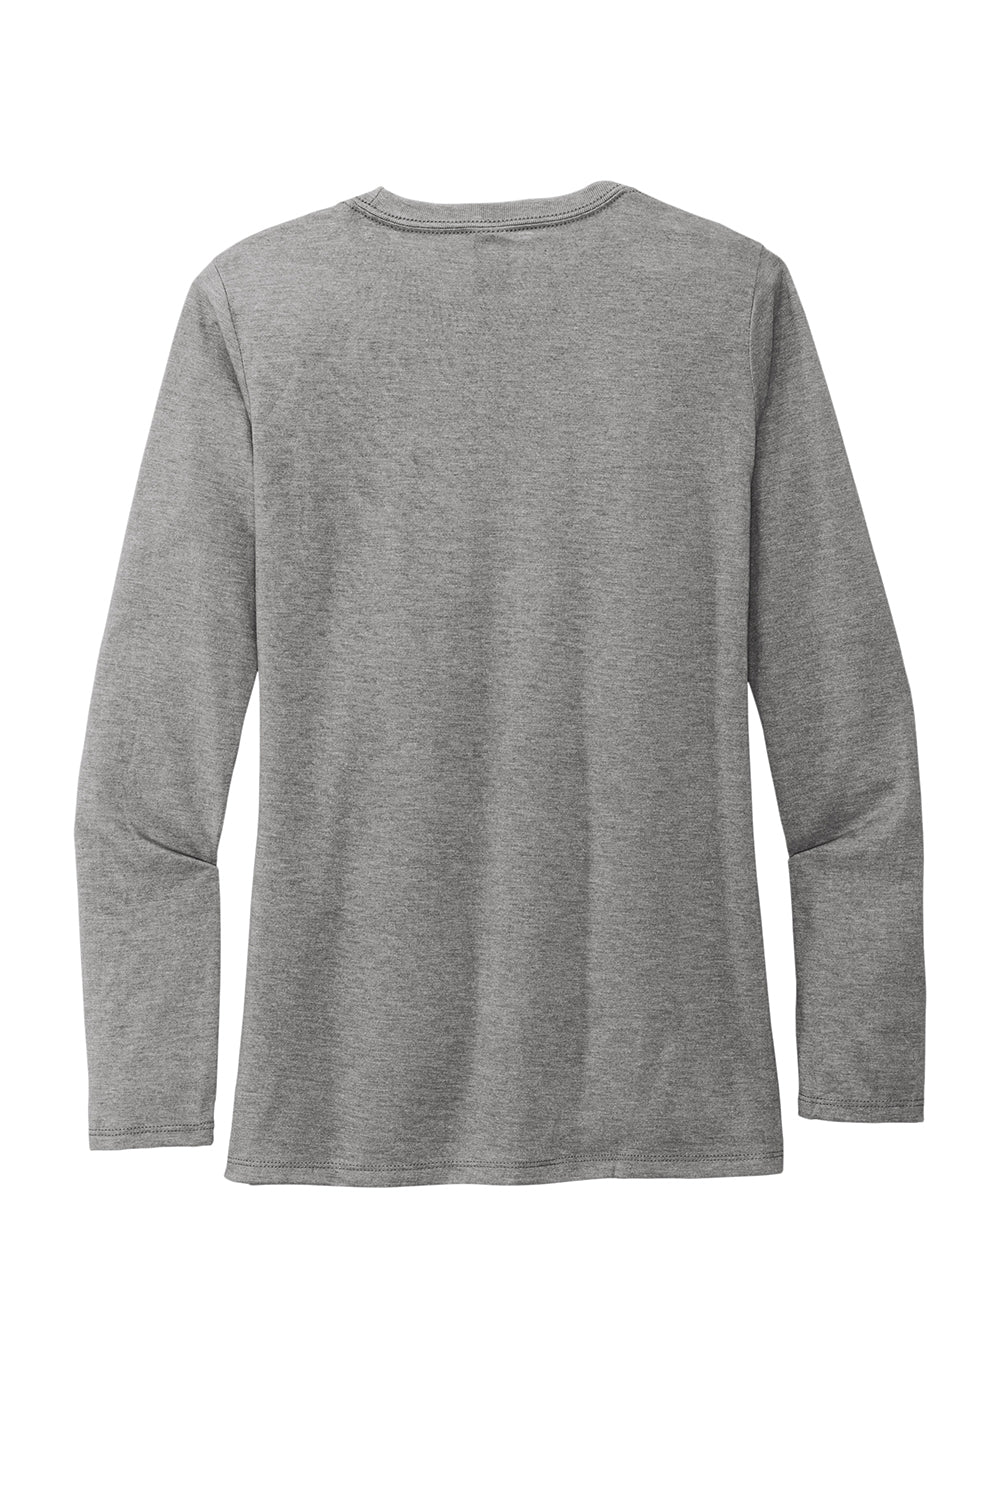 Allmade AL6008 Womens Long Sleeve Crewneck T-Shirt Aluminum Grey Flat Back